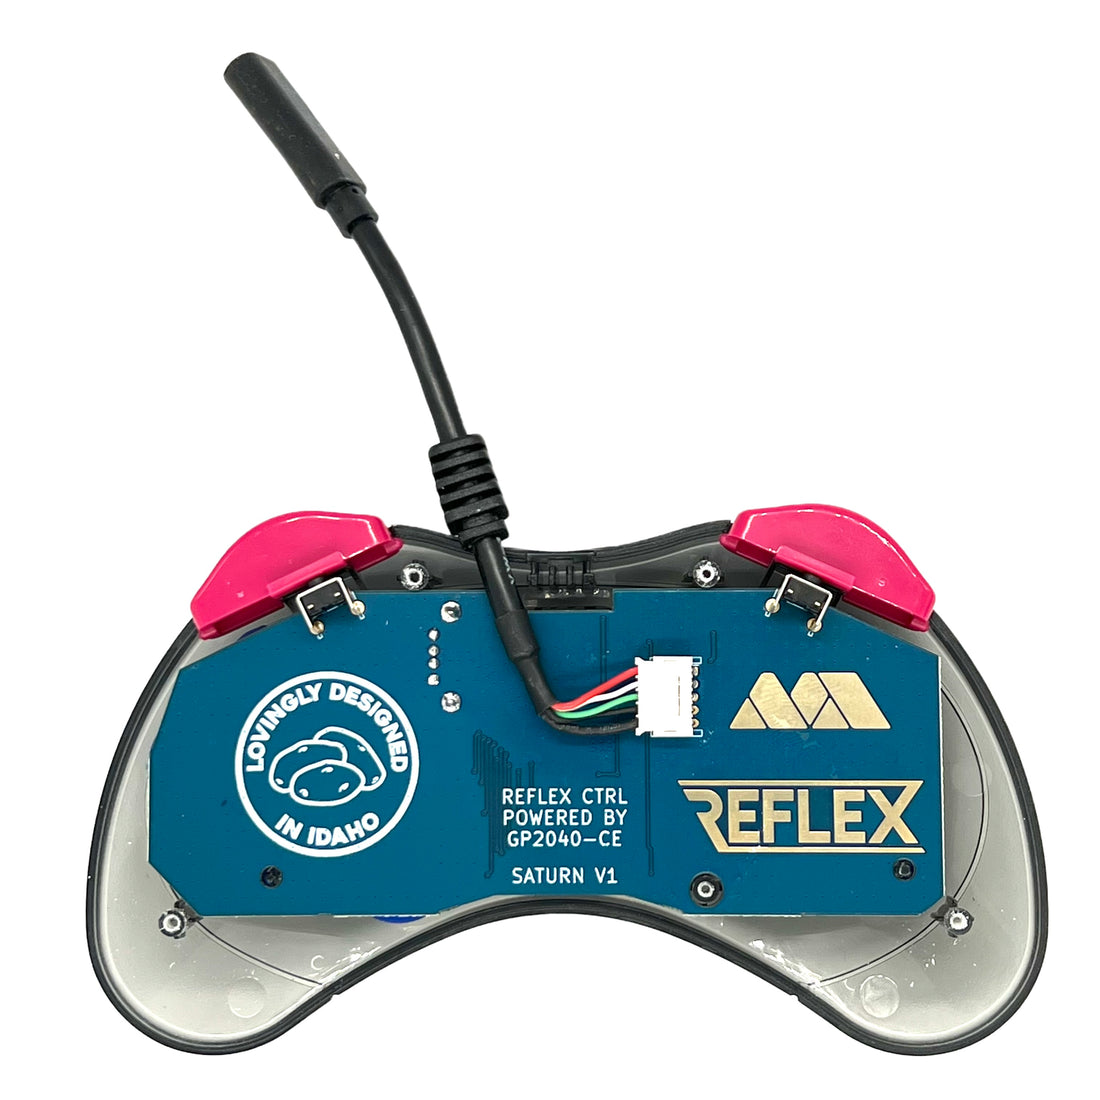 Reflex CTRL Original Controller USB Conversion Kits